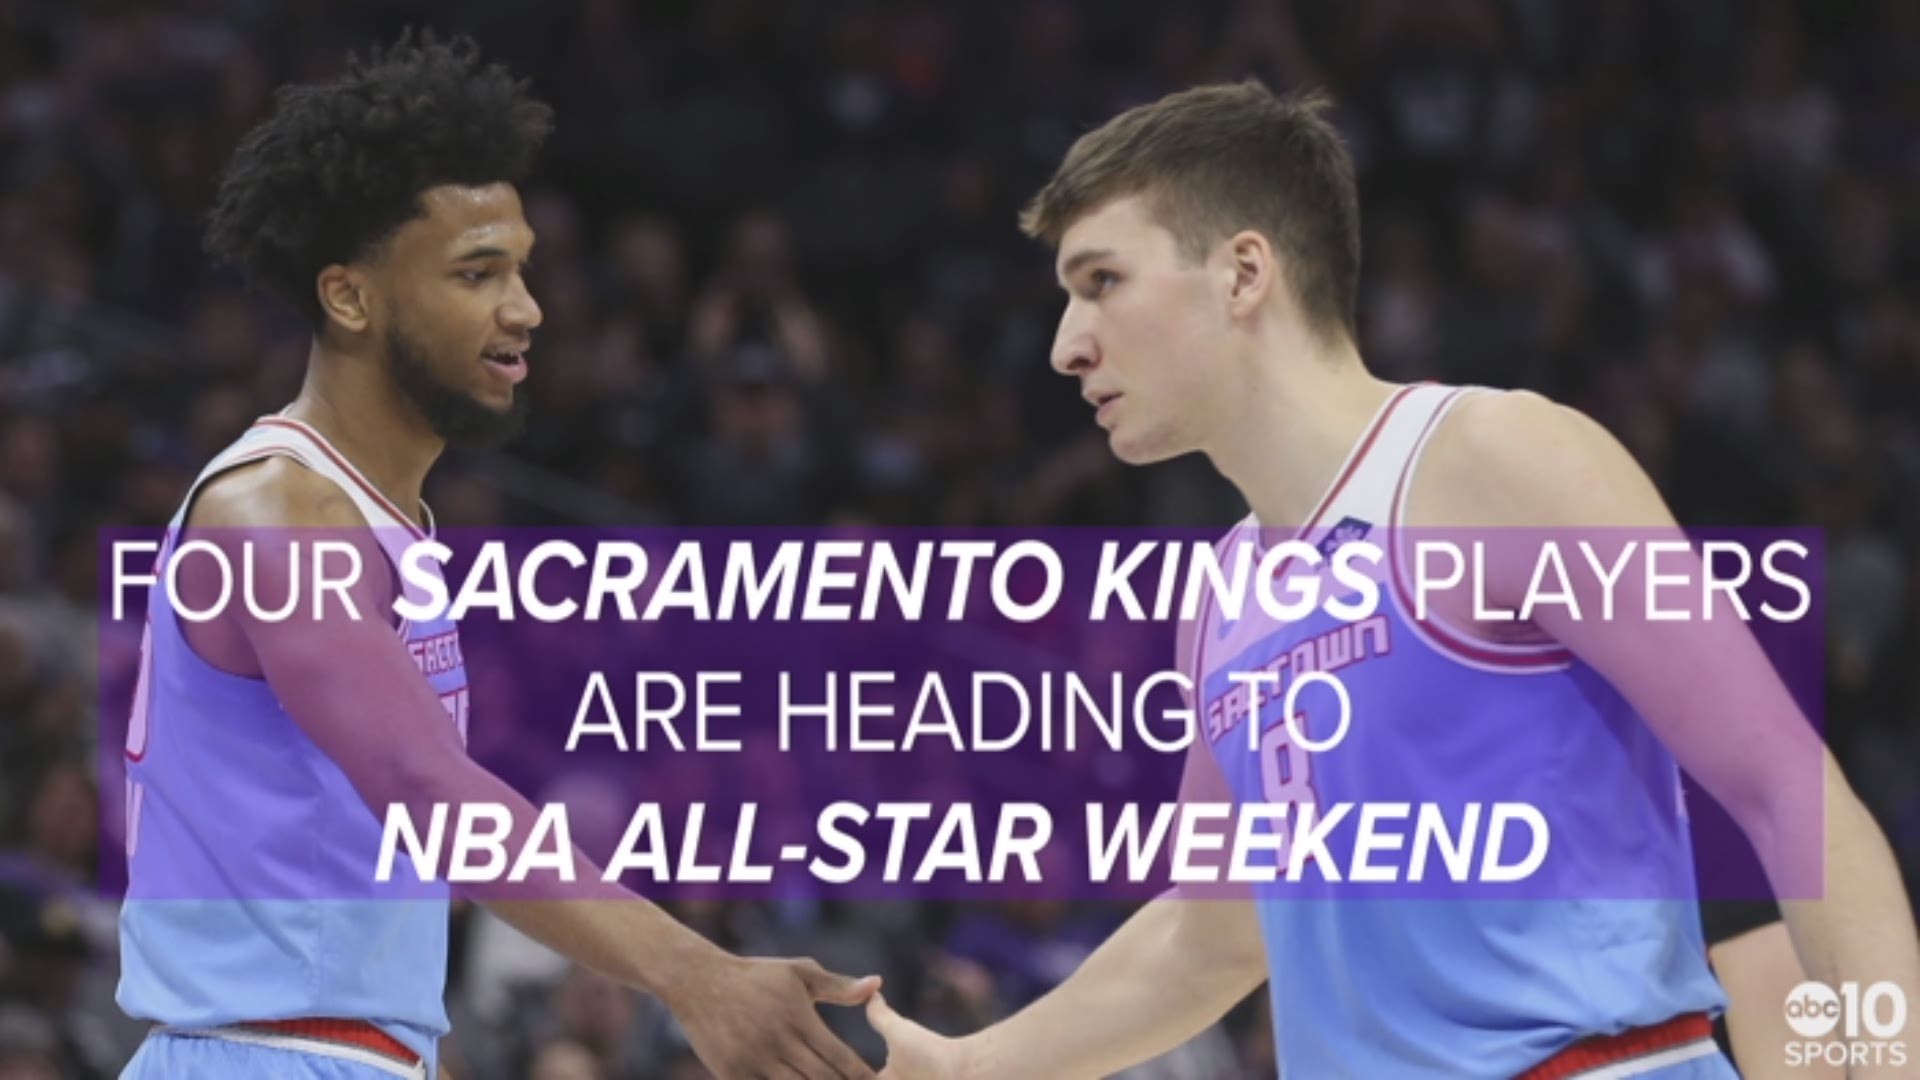 DeAaron Fox, Marvin Bagley, Buddy Hield among Kings representing Sacramento during NBA All-Star Weekend abc10